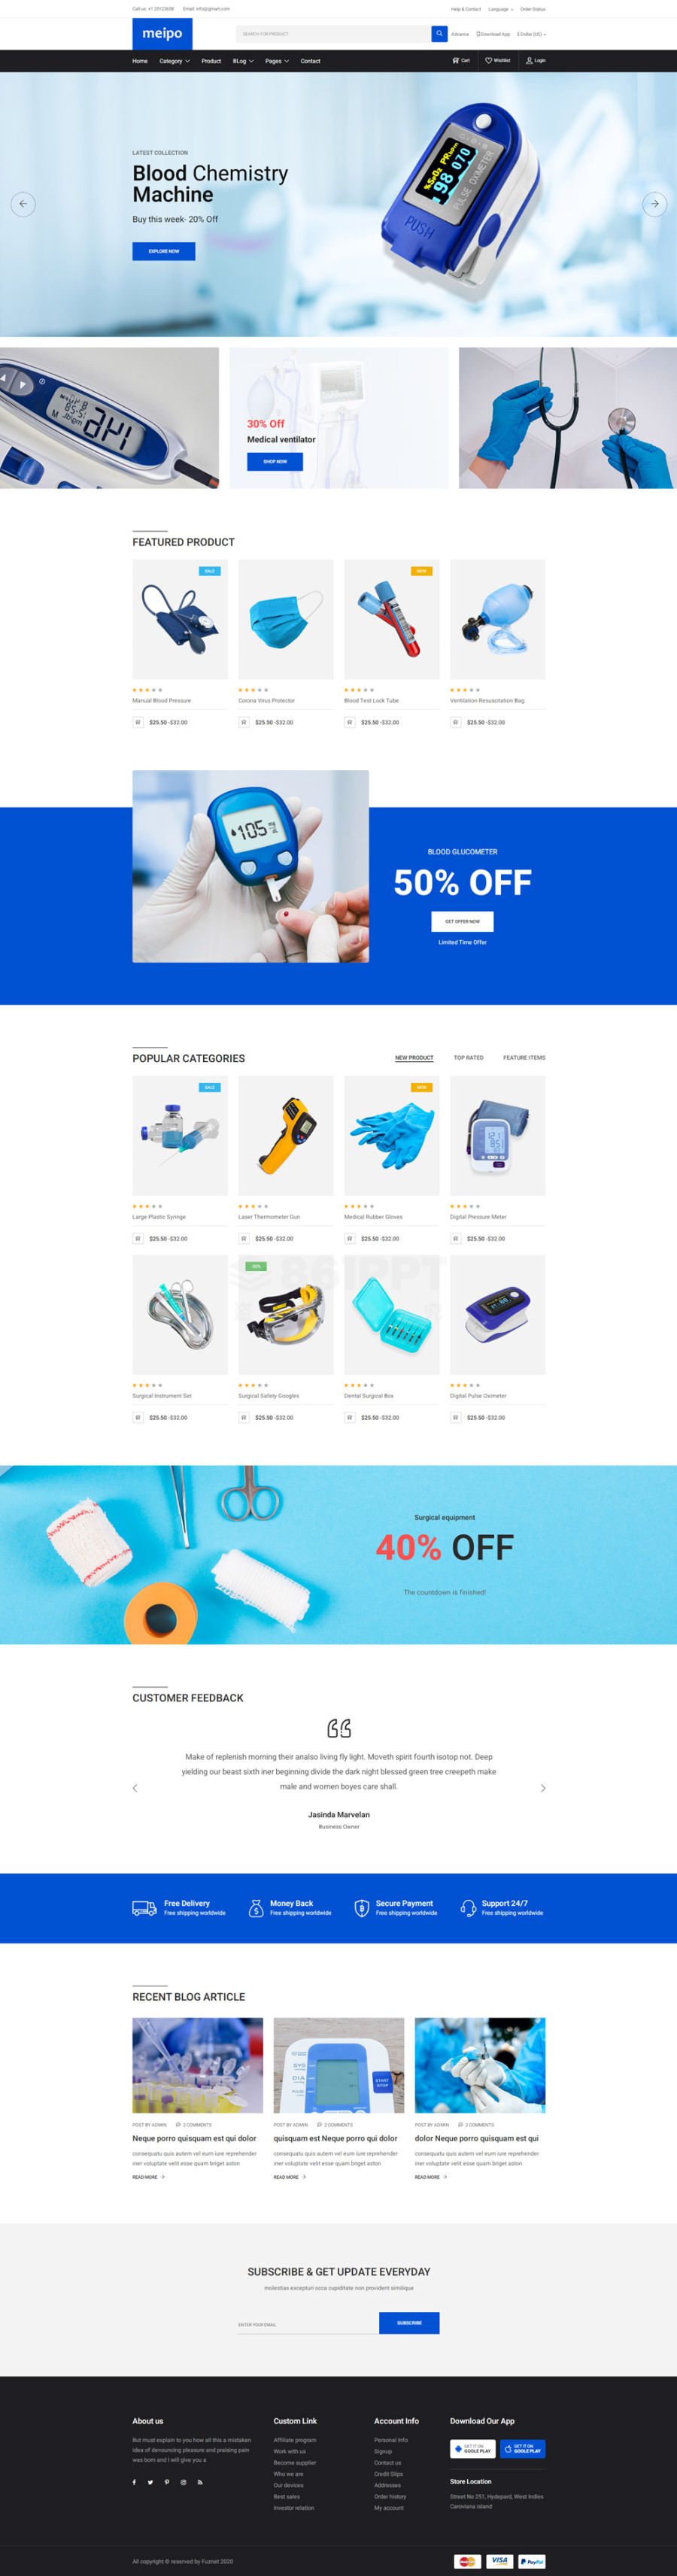 Meipo网上医疗用品商店商城网页模板html